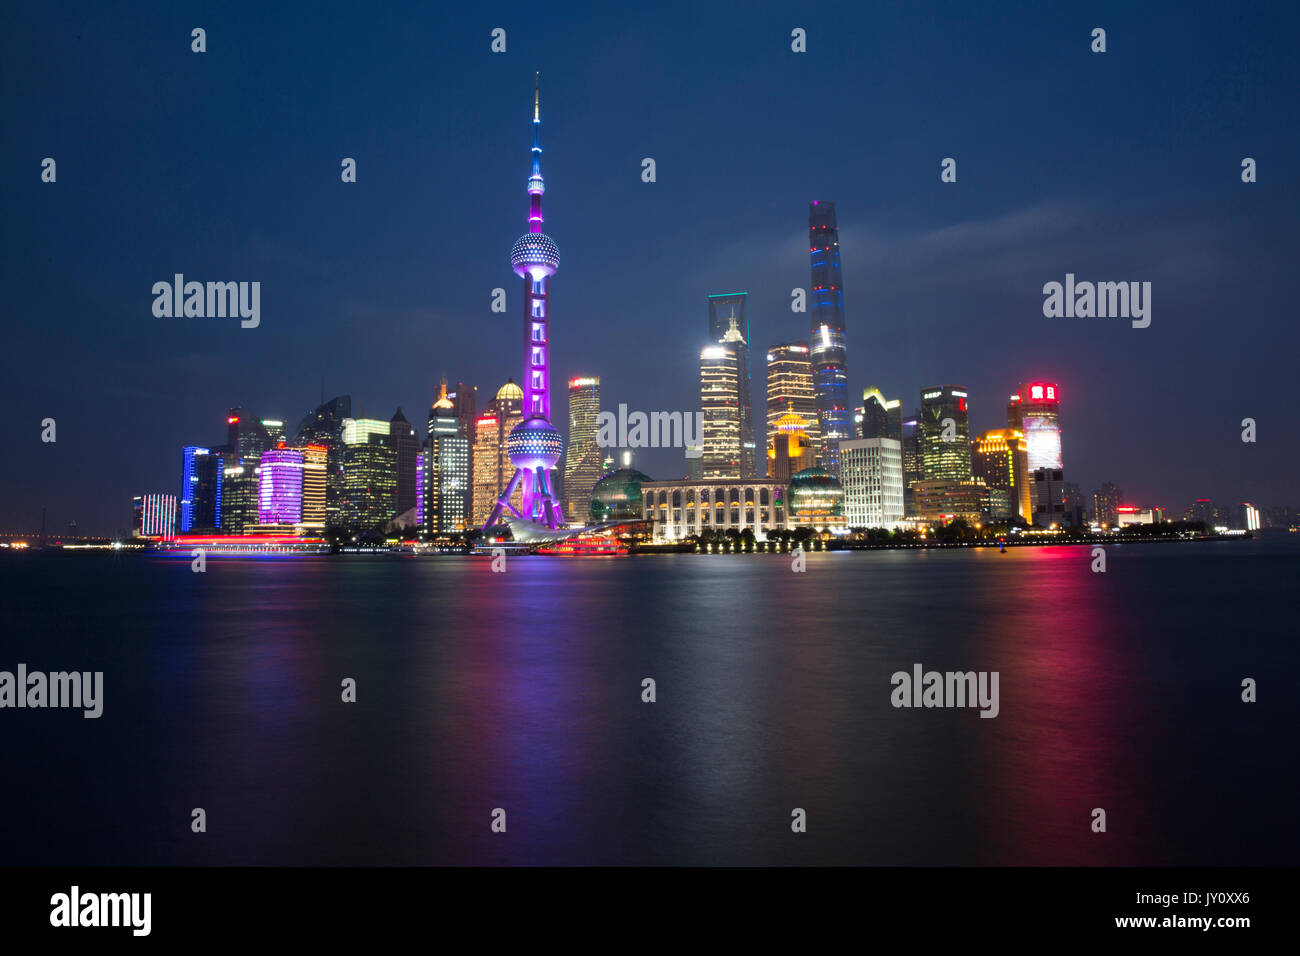 Illuminated city waterfront, Beijing, China Stock Photo